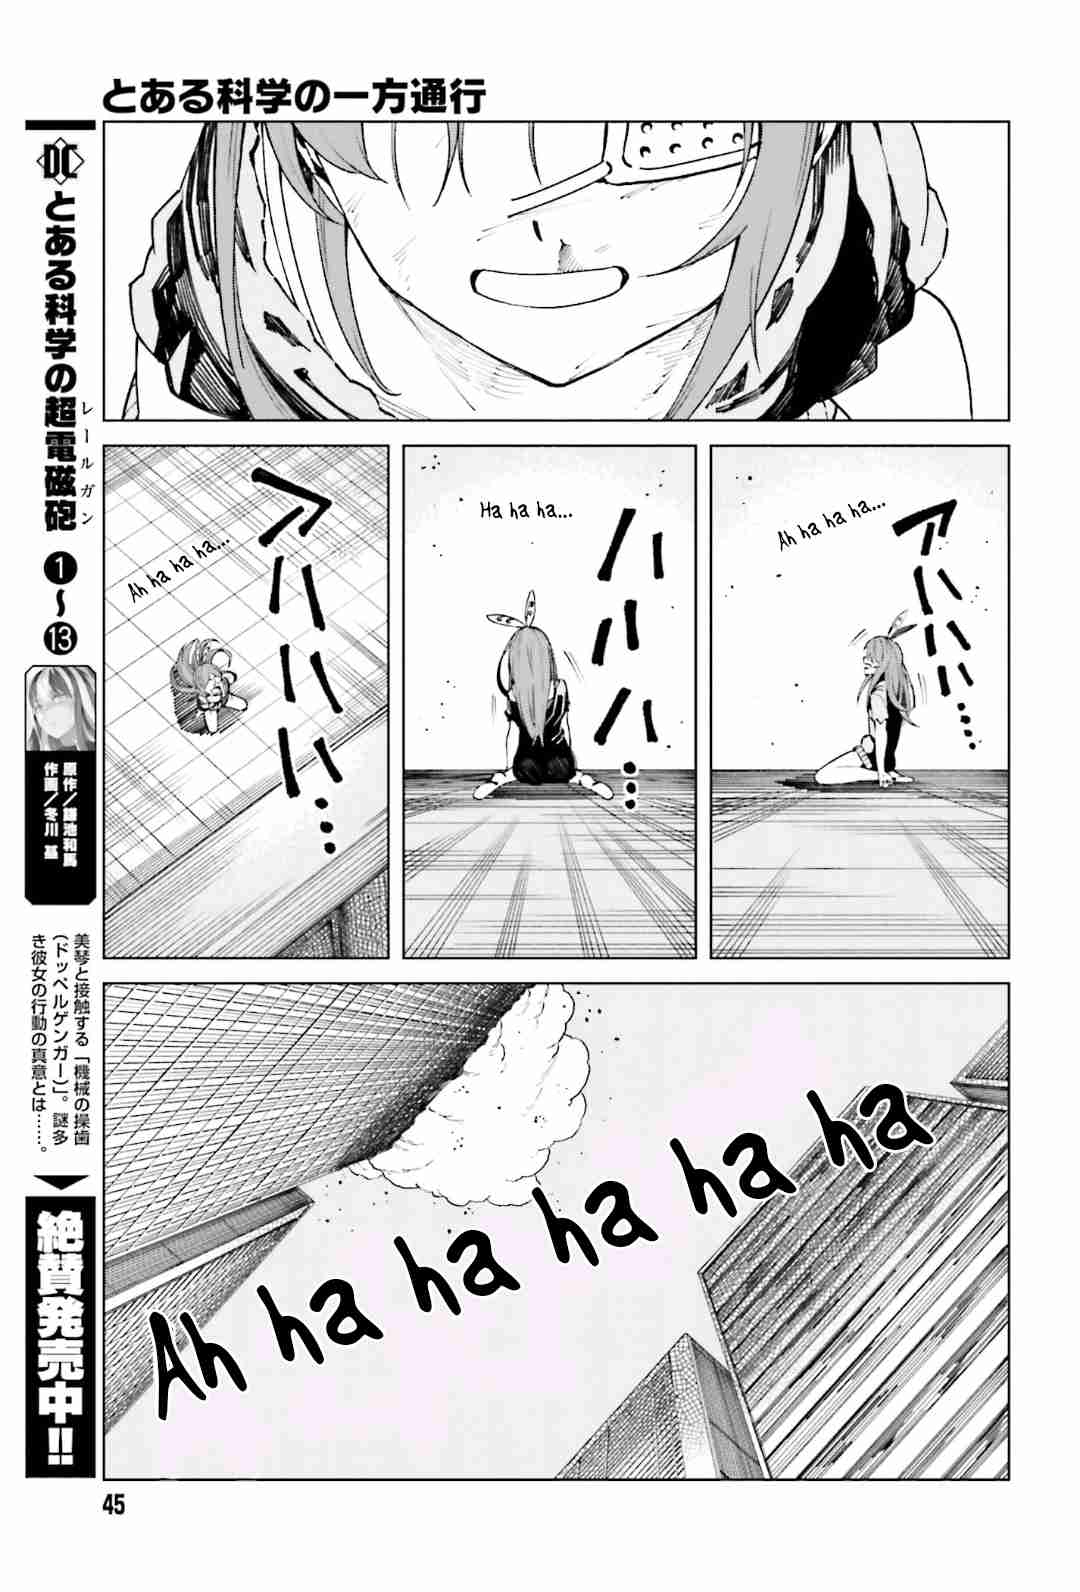 Toaru Kagaku no Accelerator Vol. 8 Ch. 46